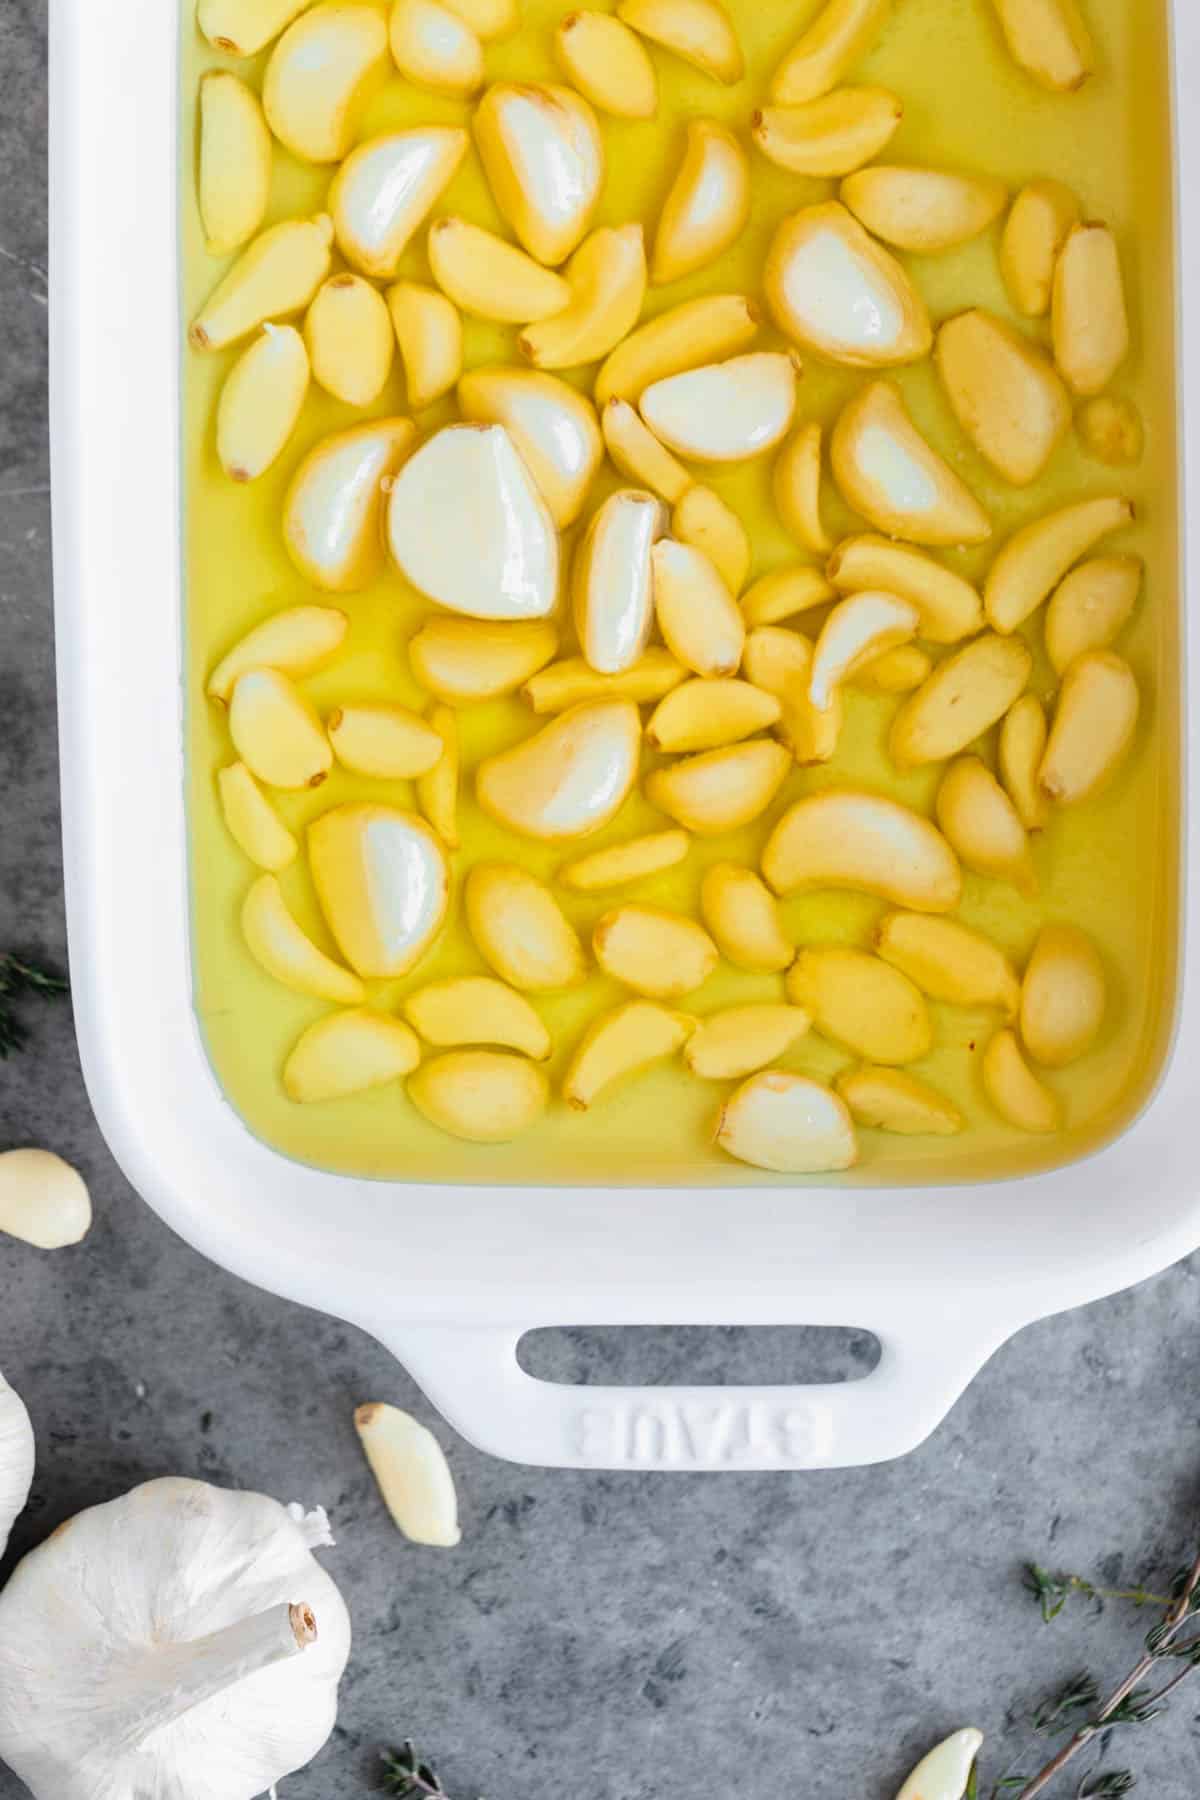 Garlic submerged in oil in a baking dish. 